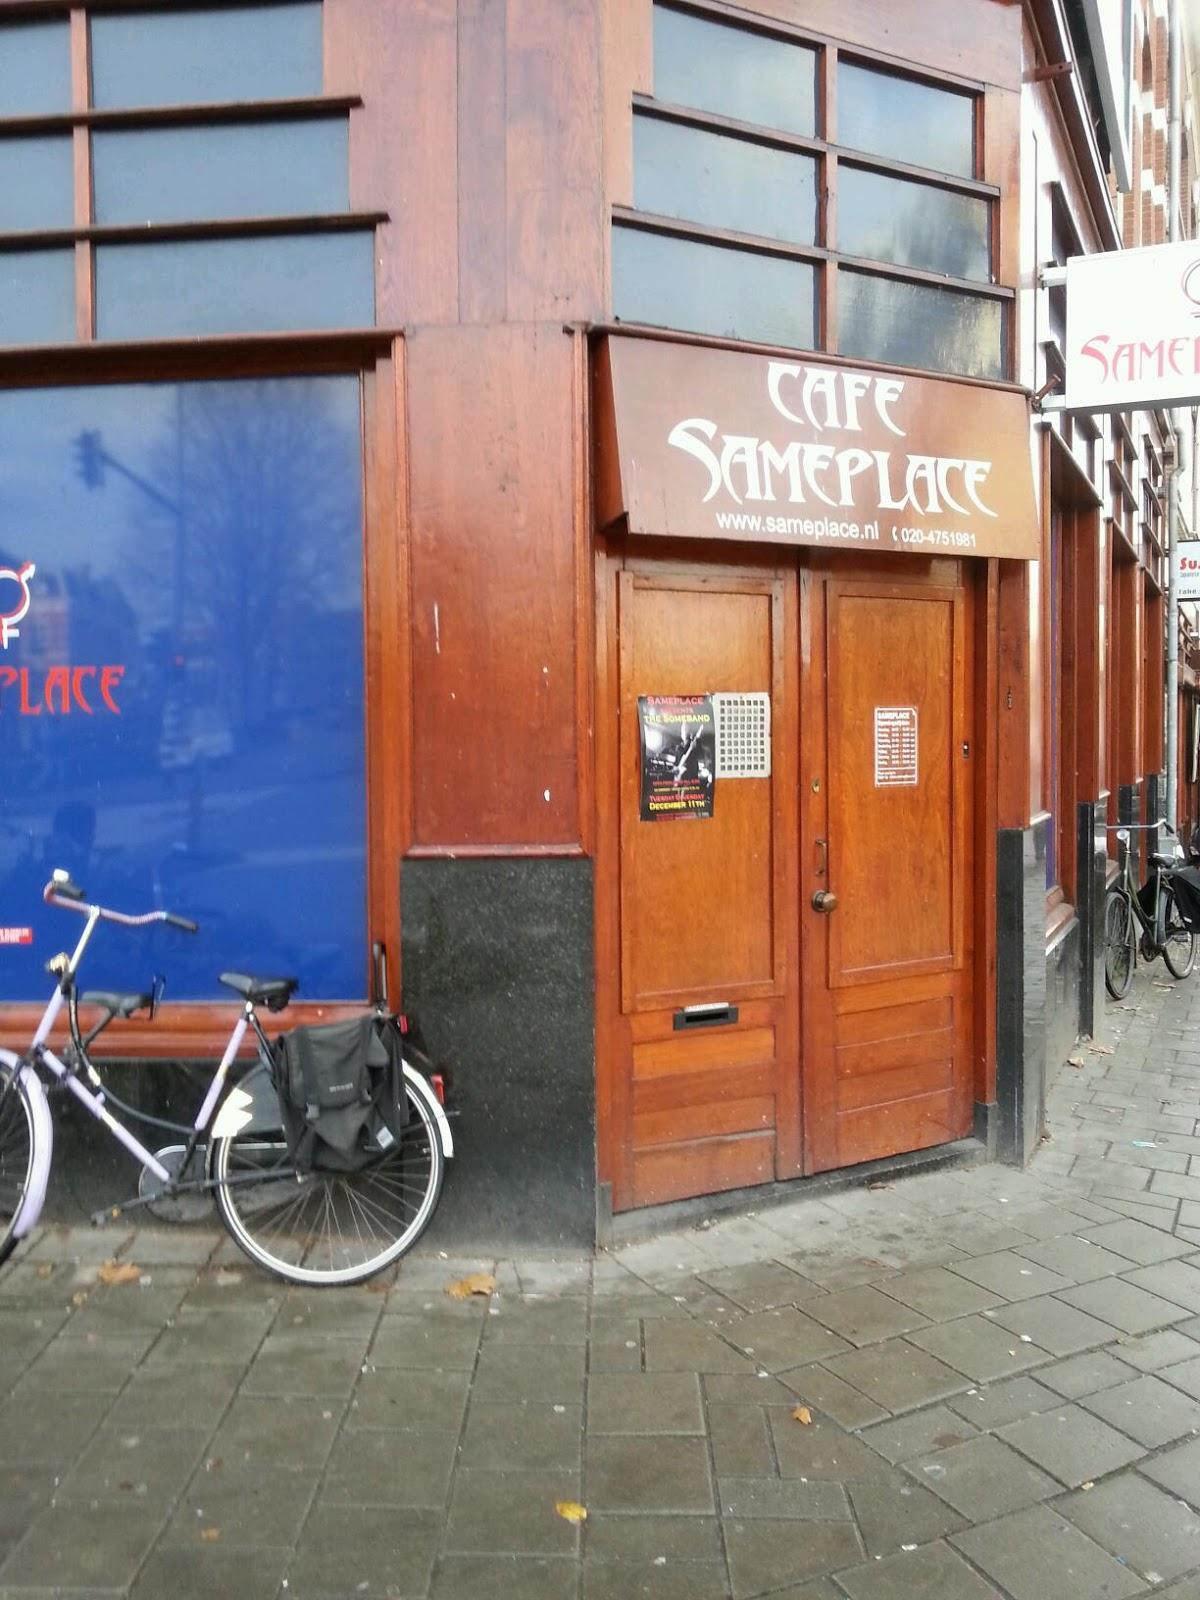 Sameplace cafe amsterdam